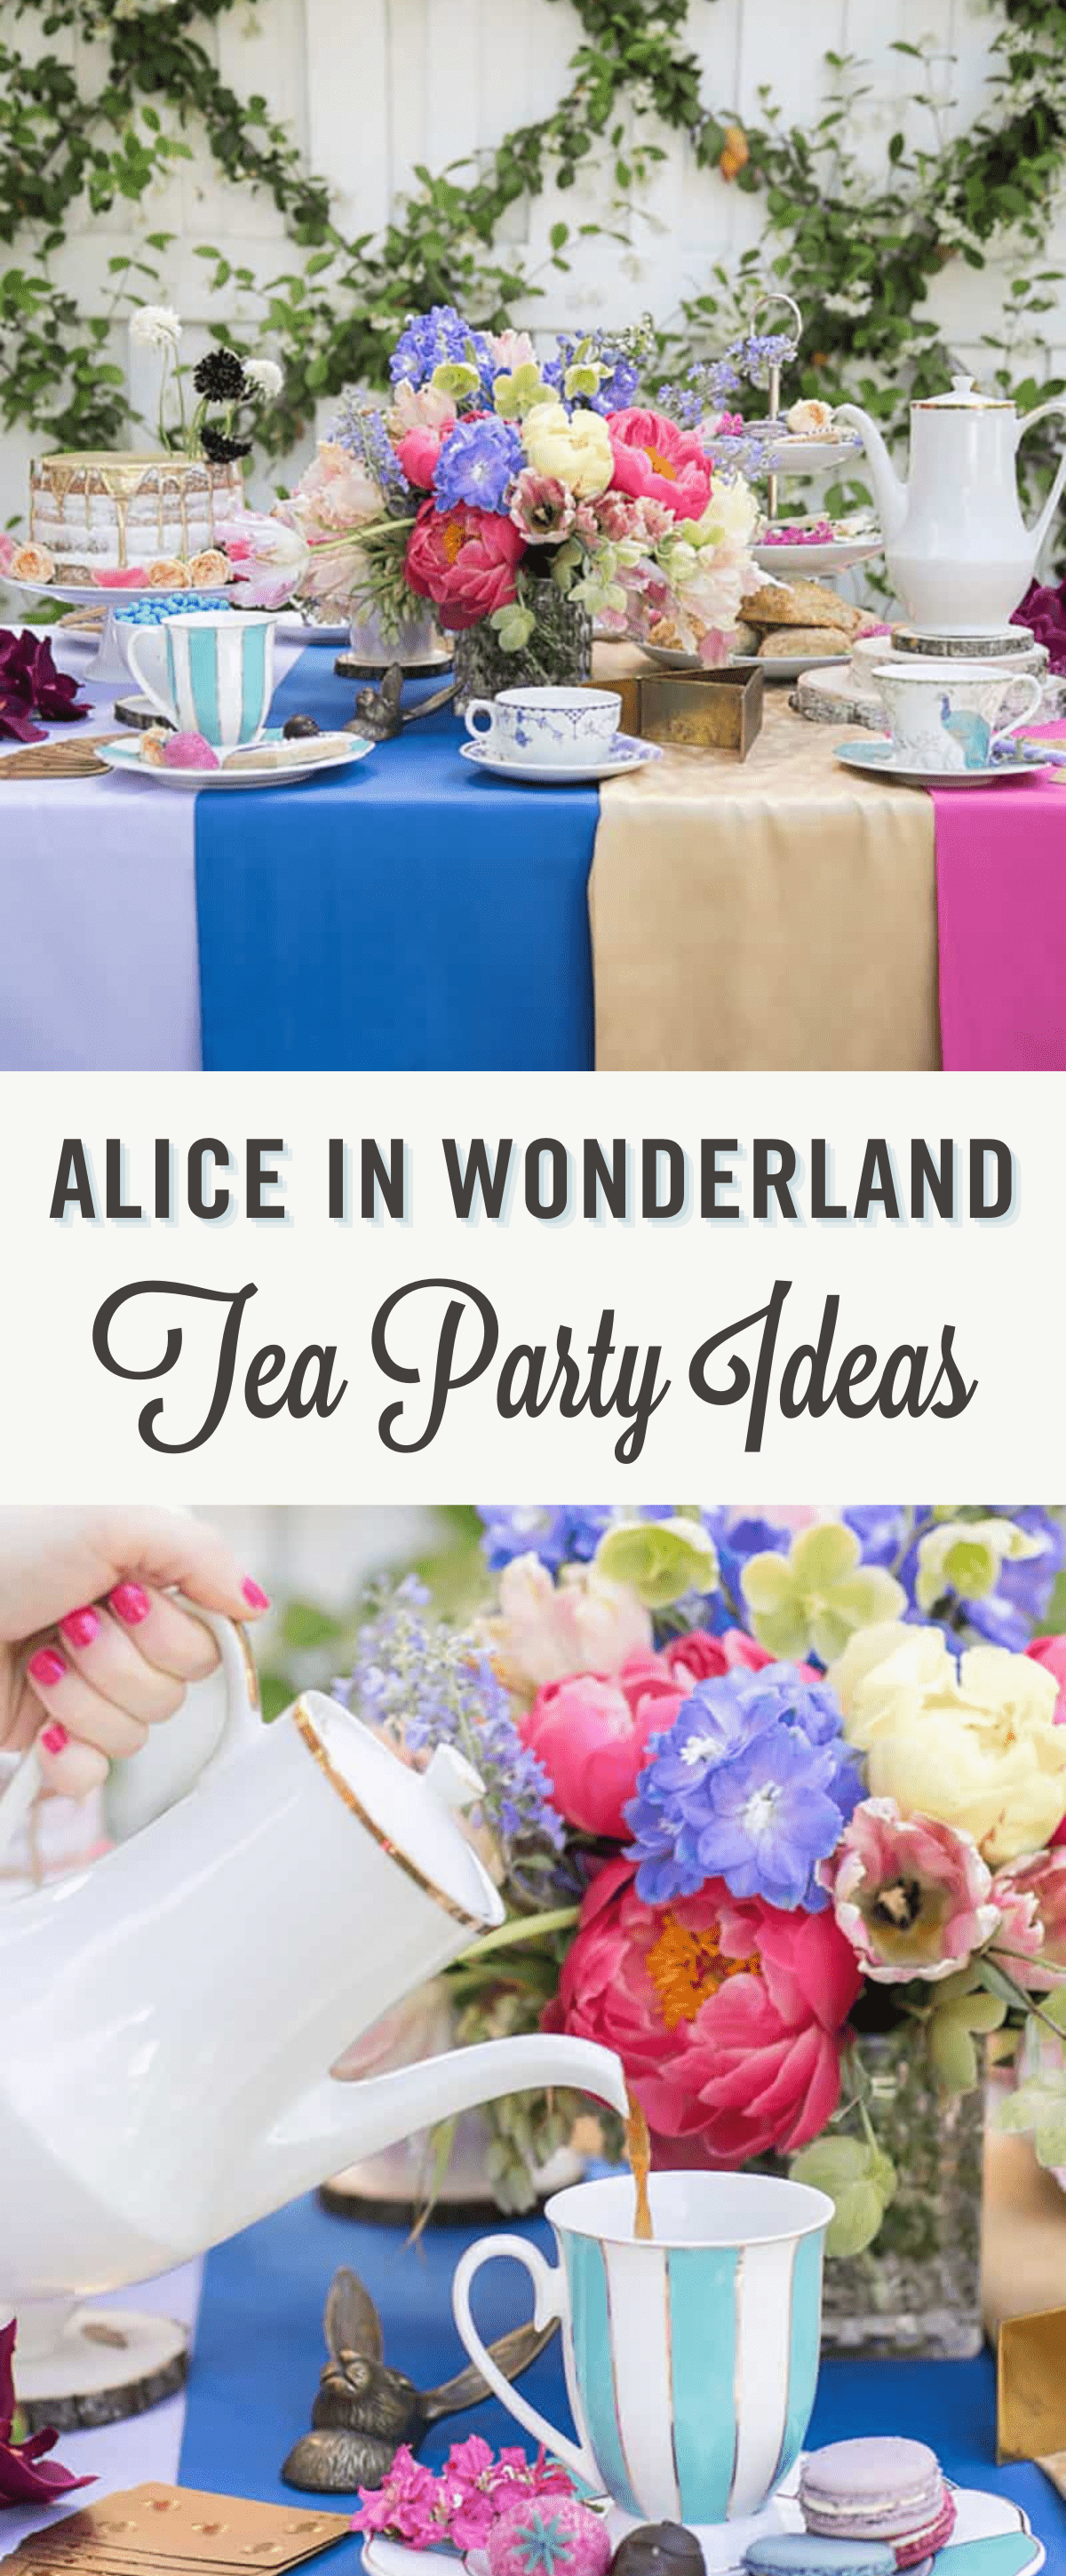 Alice in wonderful tea party ideas.